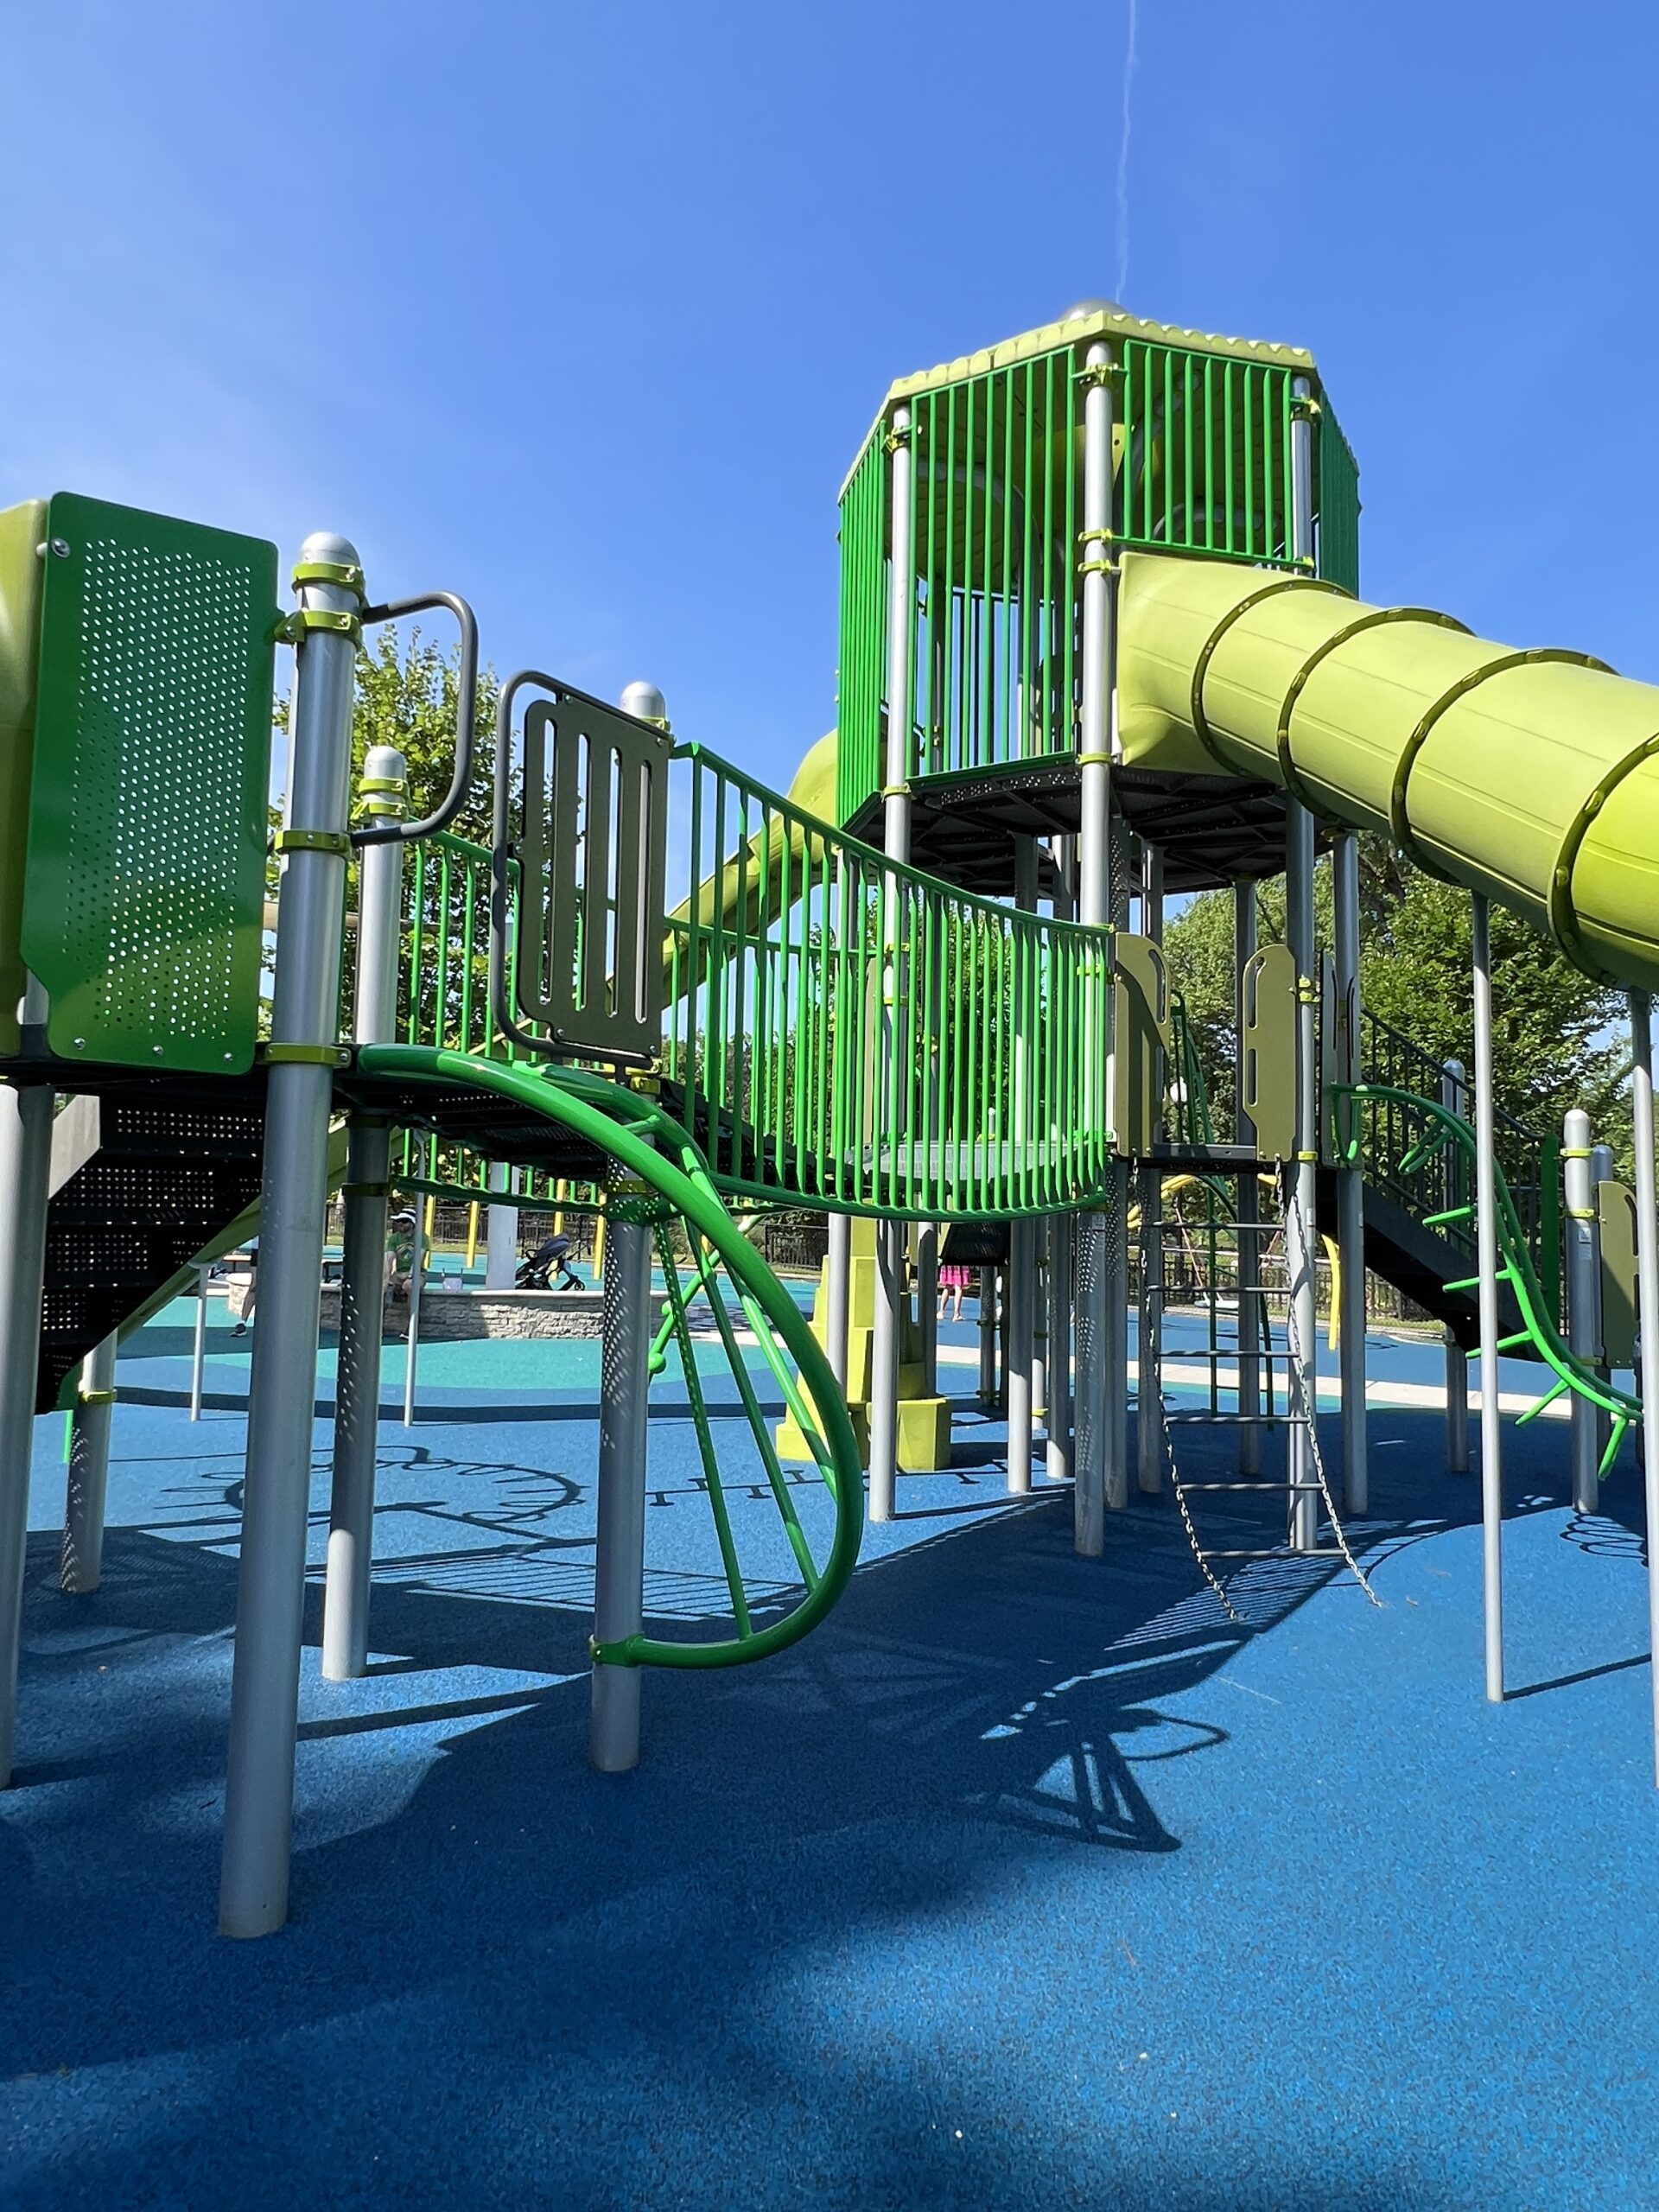 Verona Park Playground in Verona NJ - Features - bridge and climbing ladders